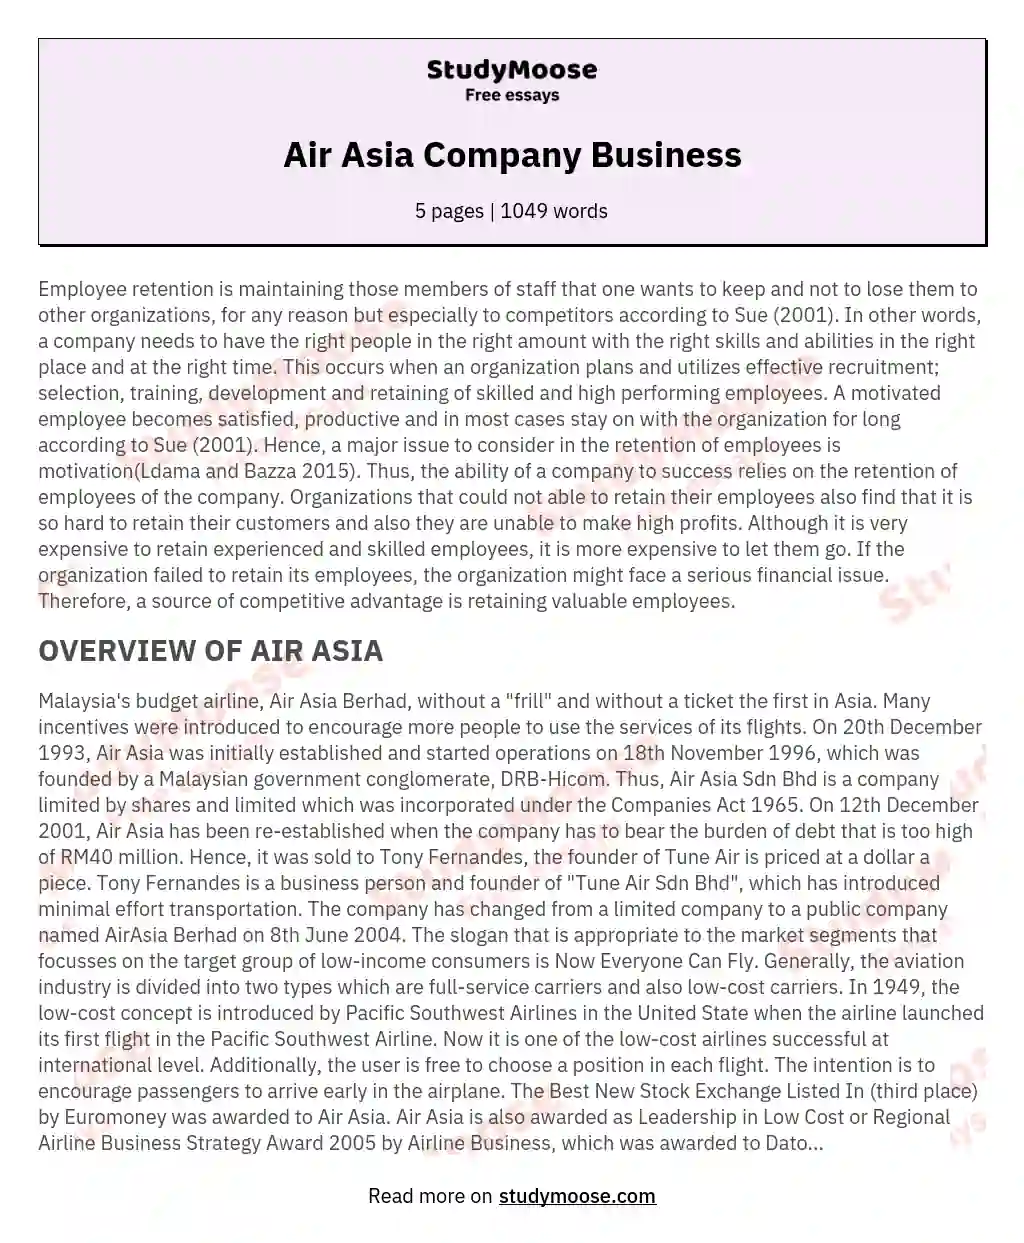 Air Asia Company Business essay